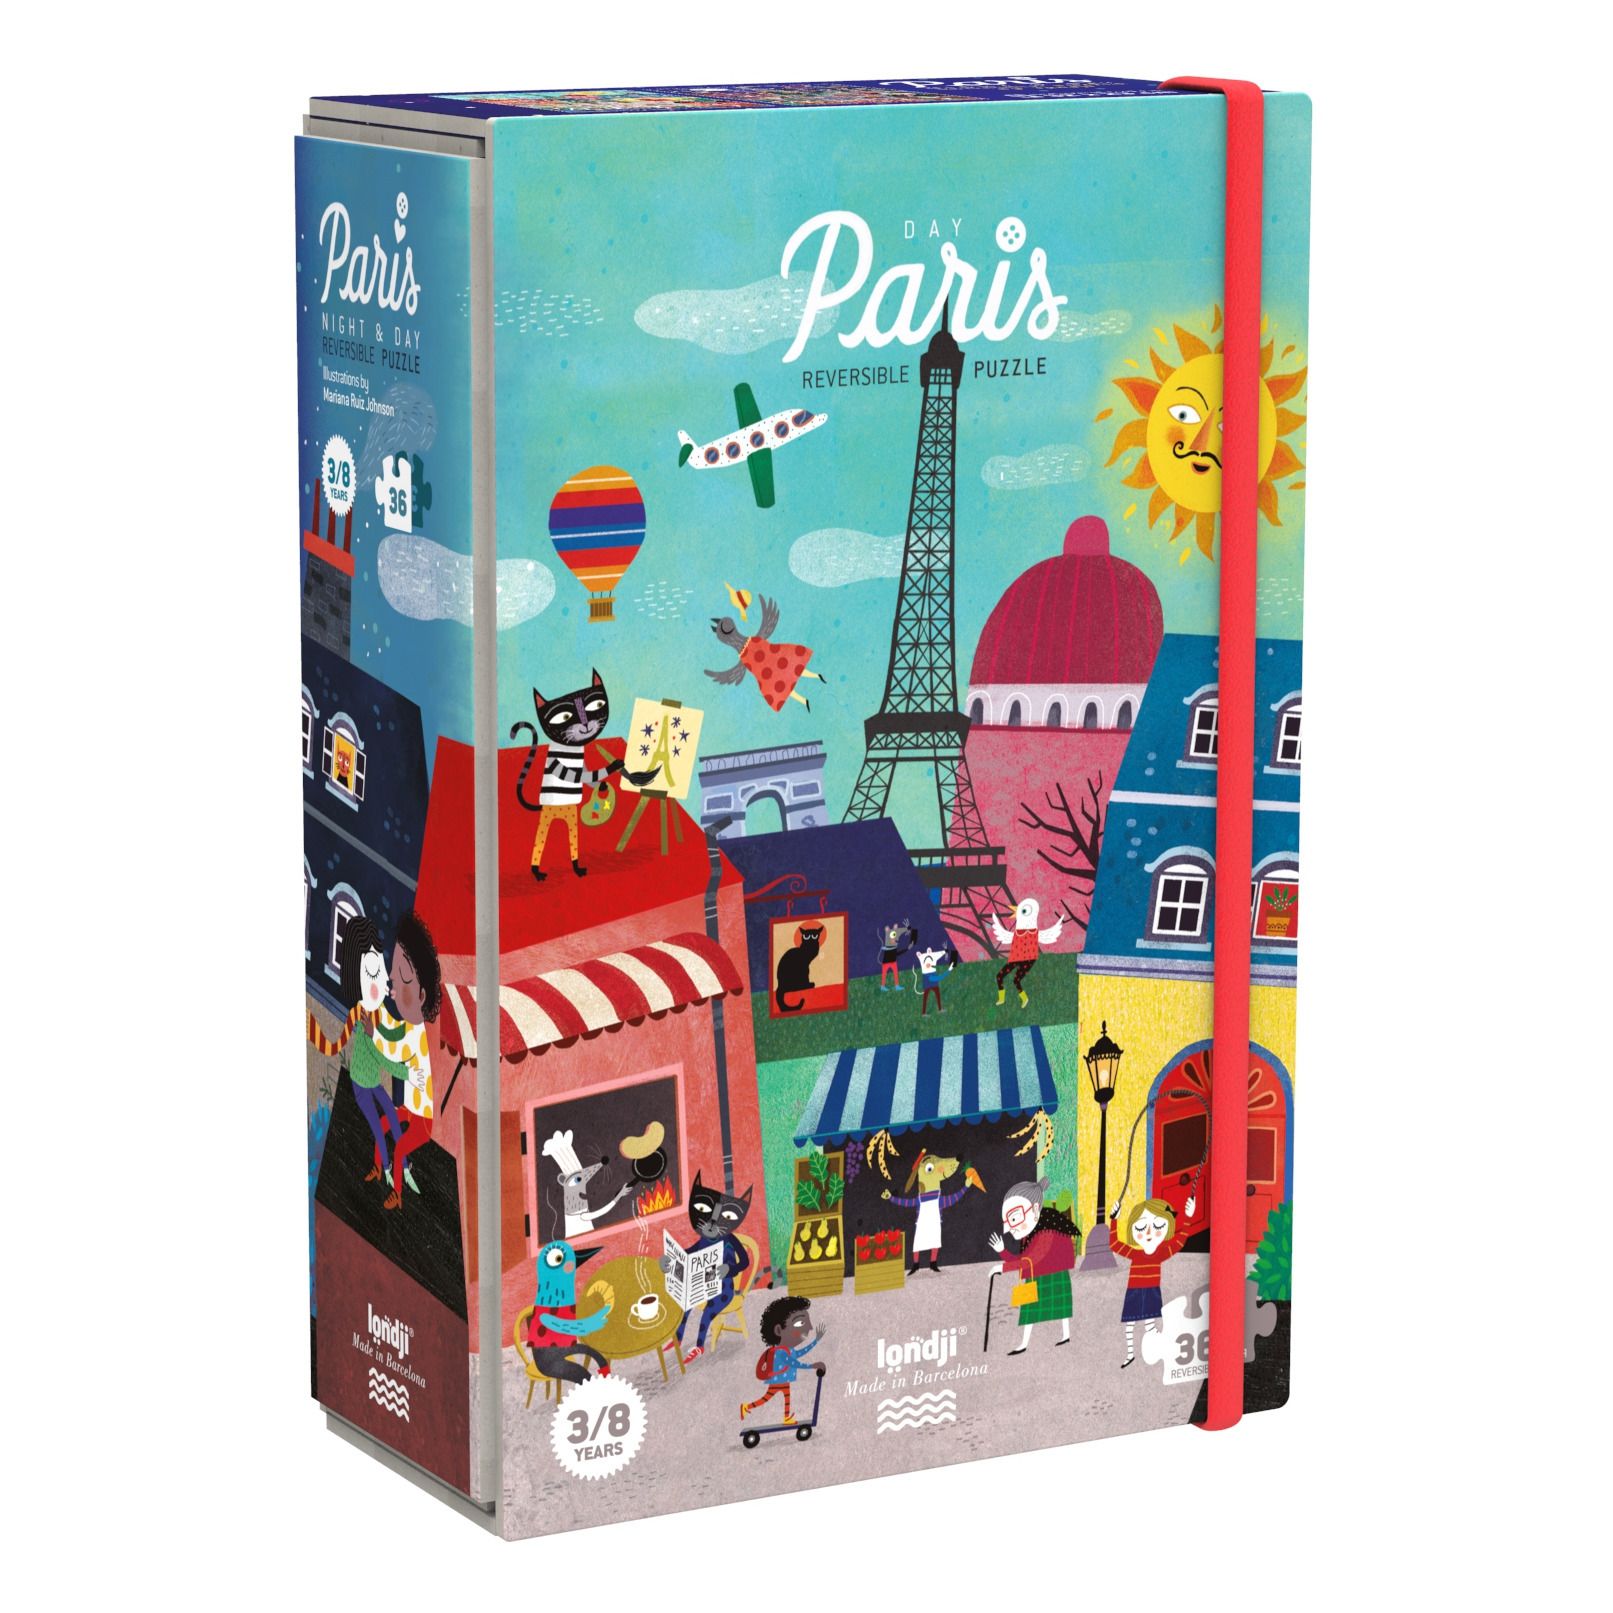 Reversible Night/Day Paris puzzle